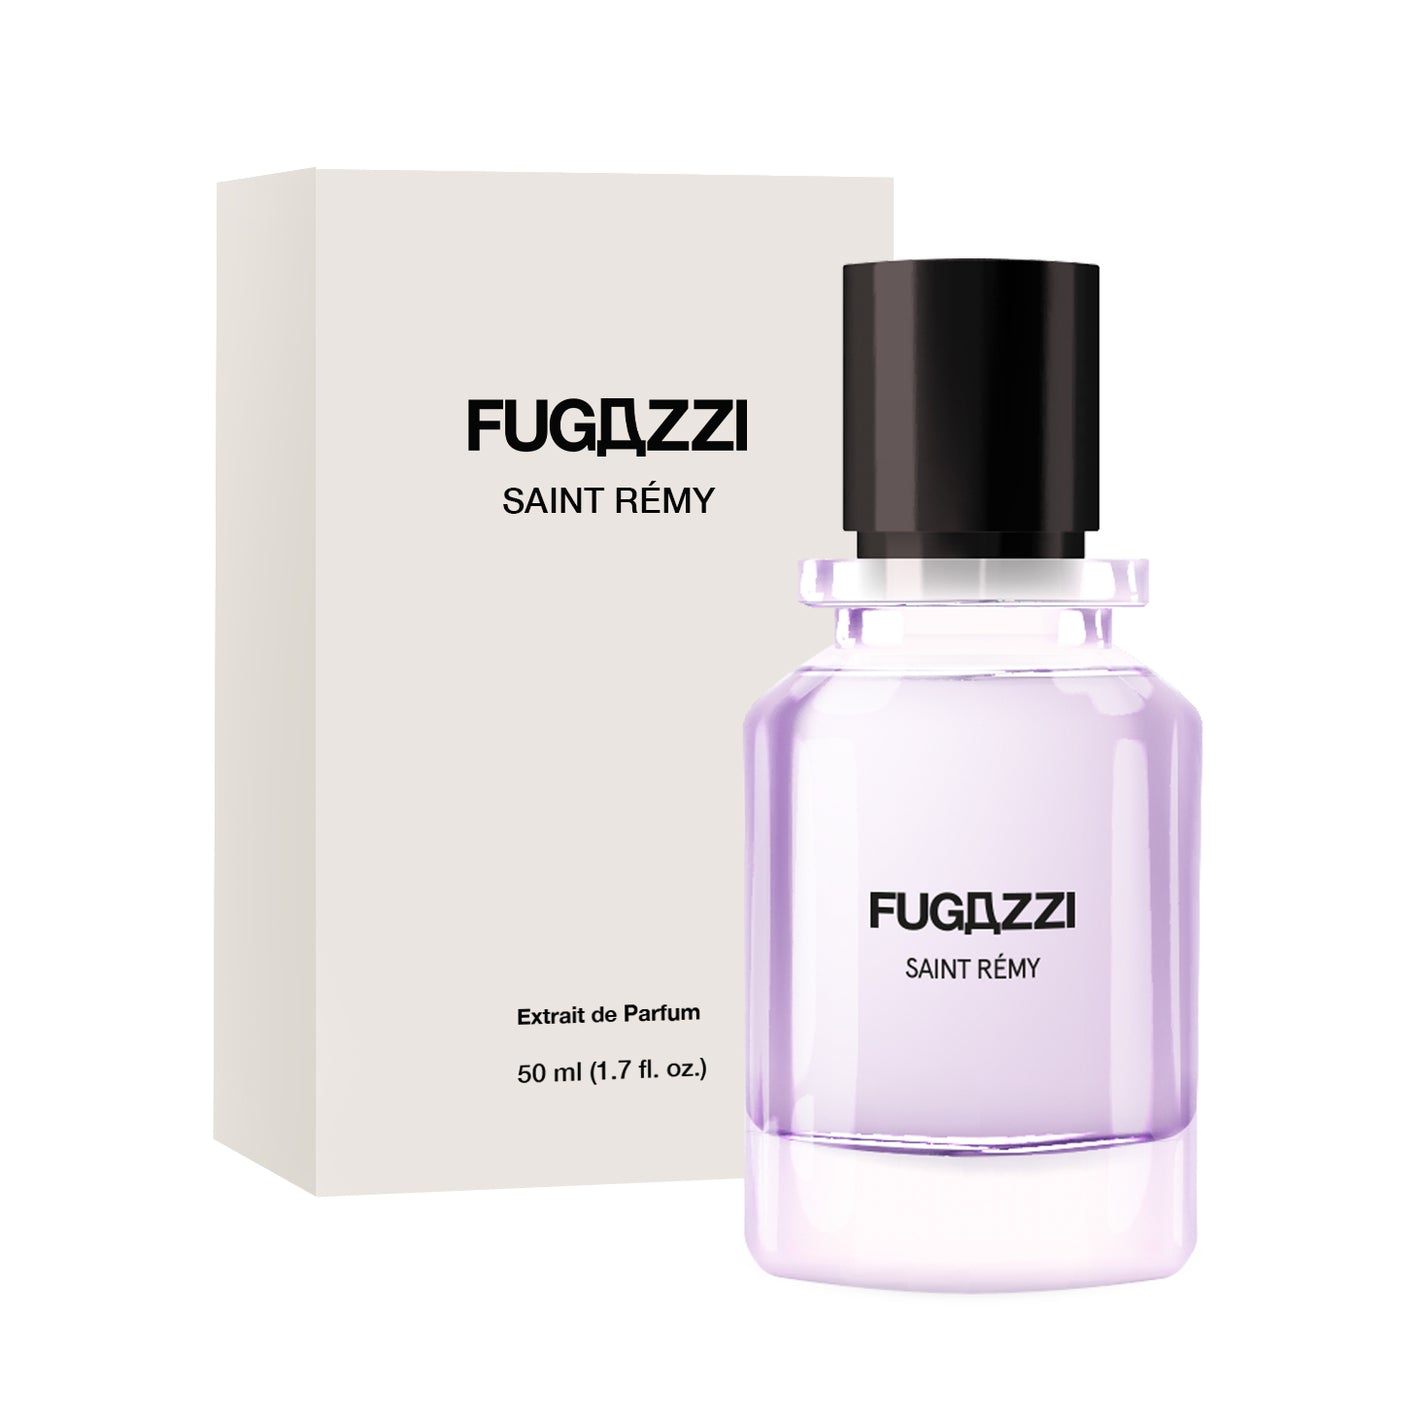 Fugazzi Saint Rémy Extrait de Parfum - 50ml